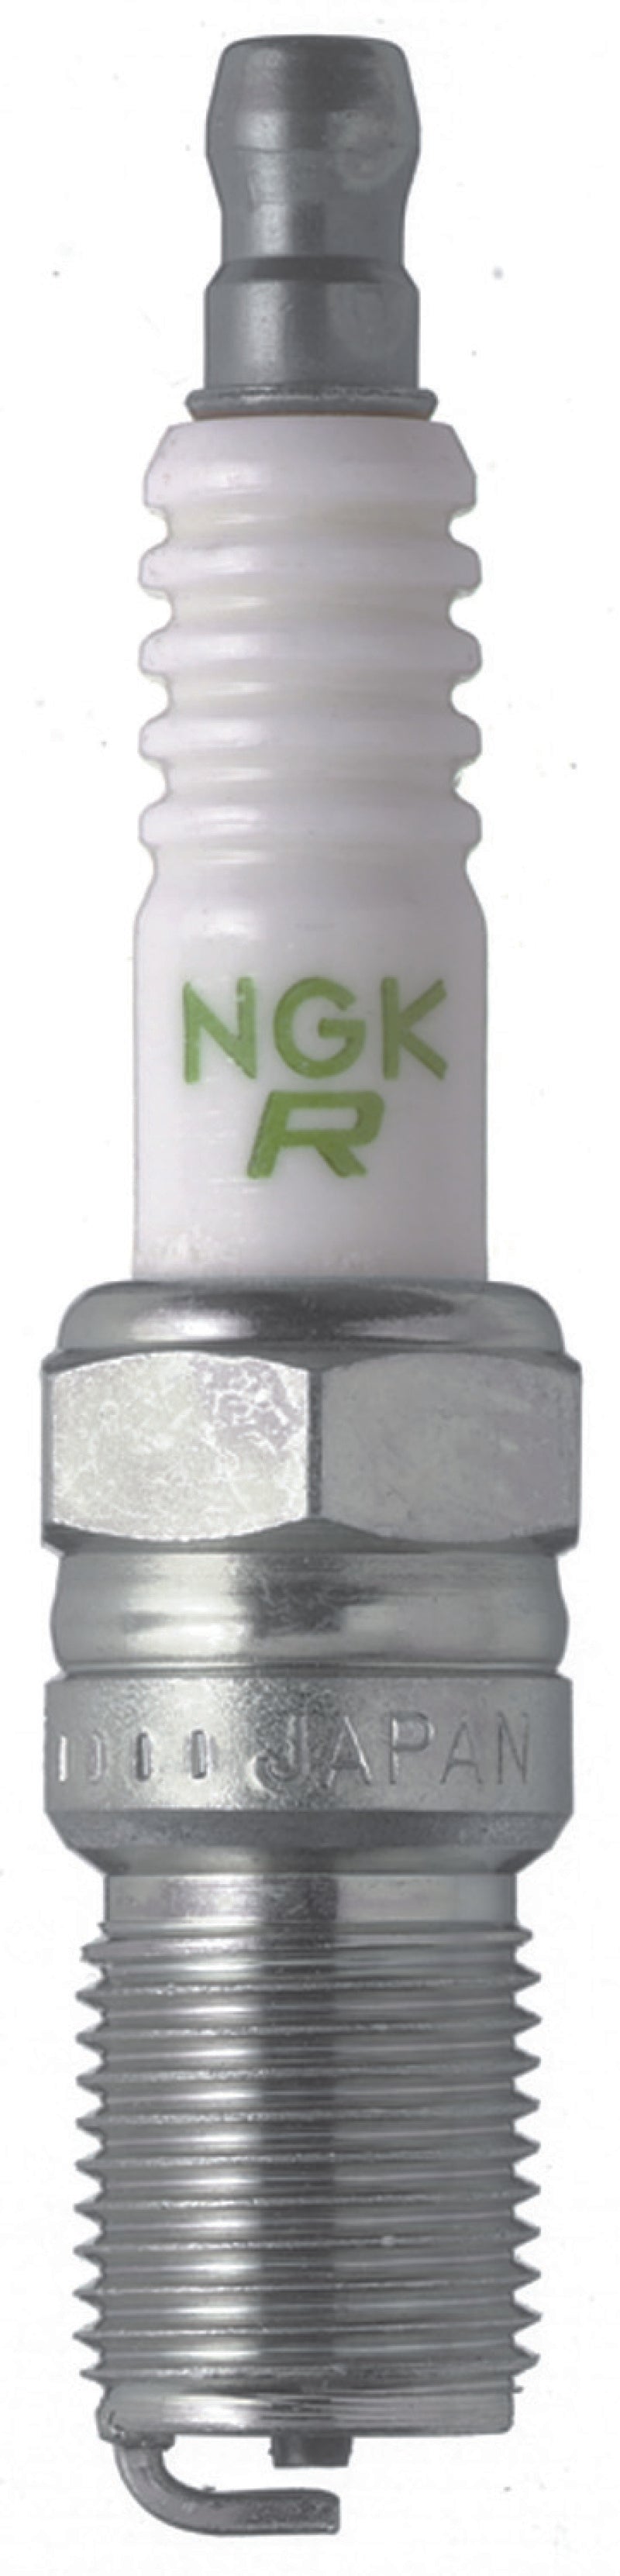 NGK Nickel Spark Plug Box of 10 (BR7EF) -  Shop now at Performance Car Parts